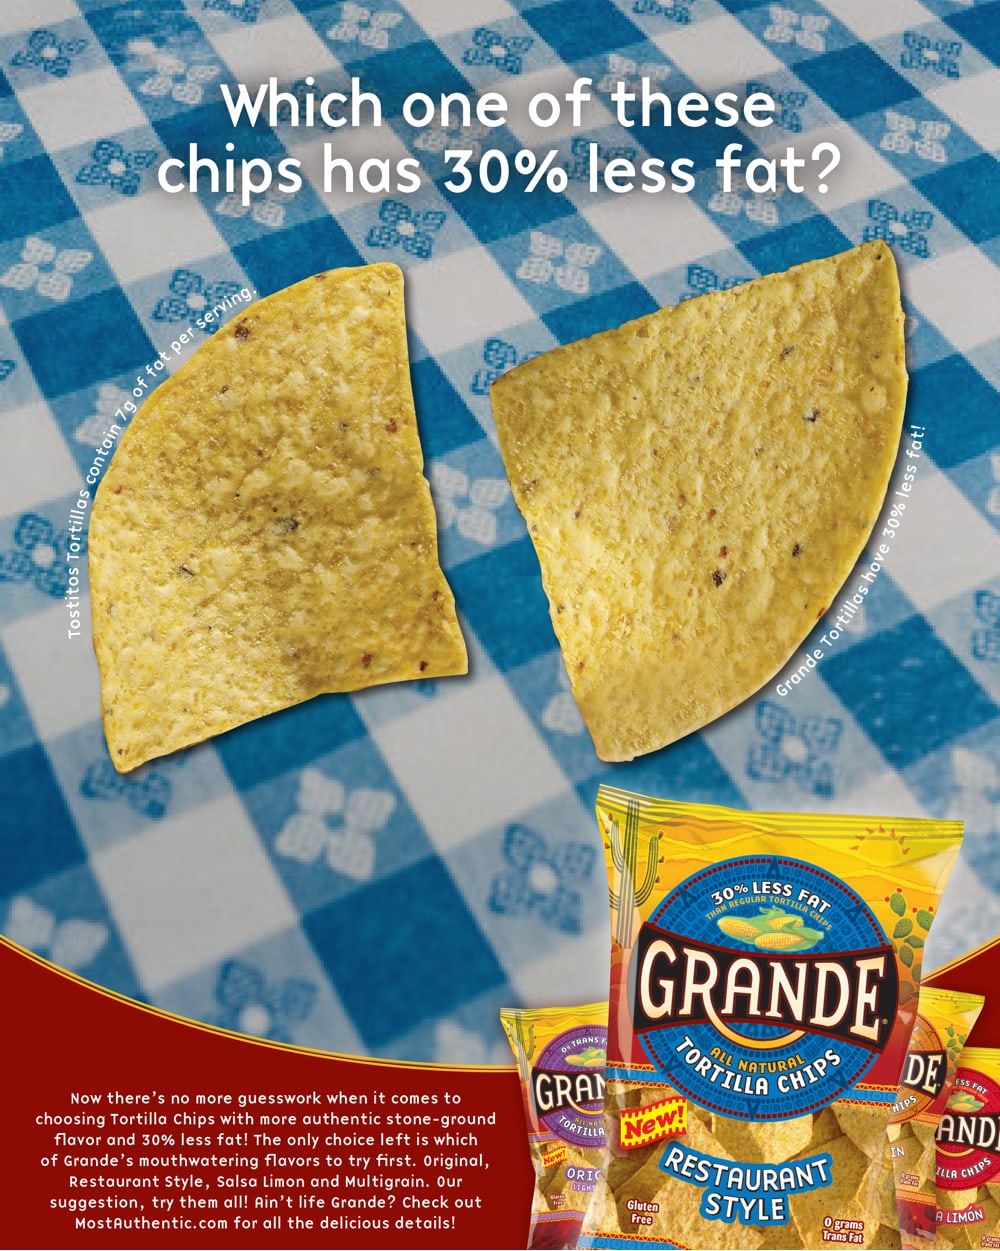 Snyders Grande Chips Ad Concept